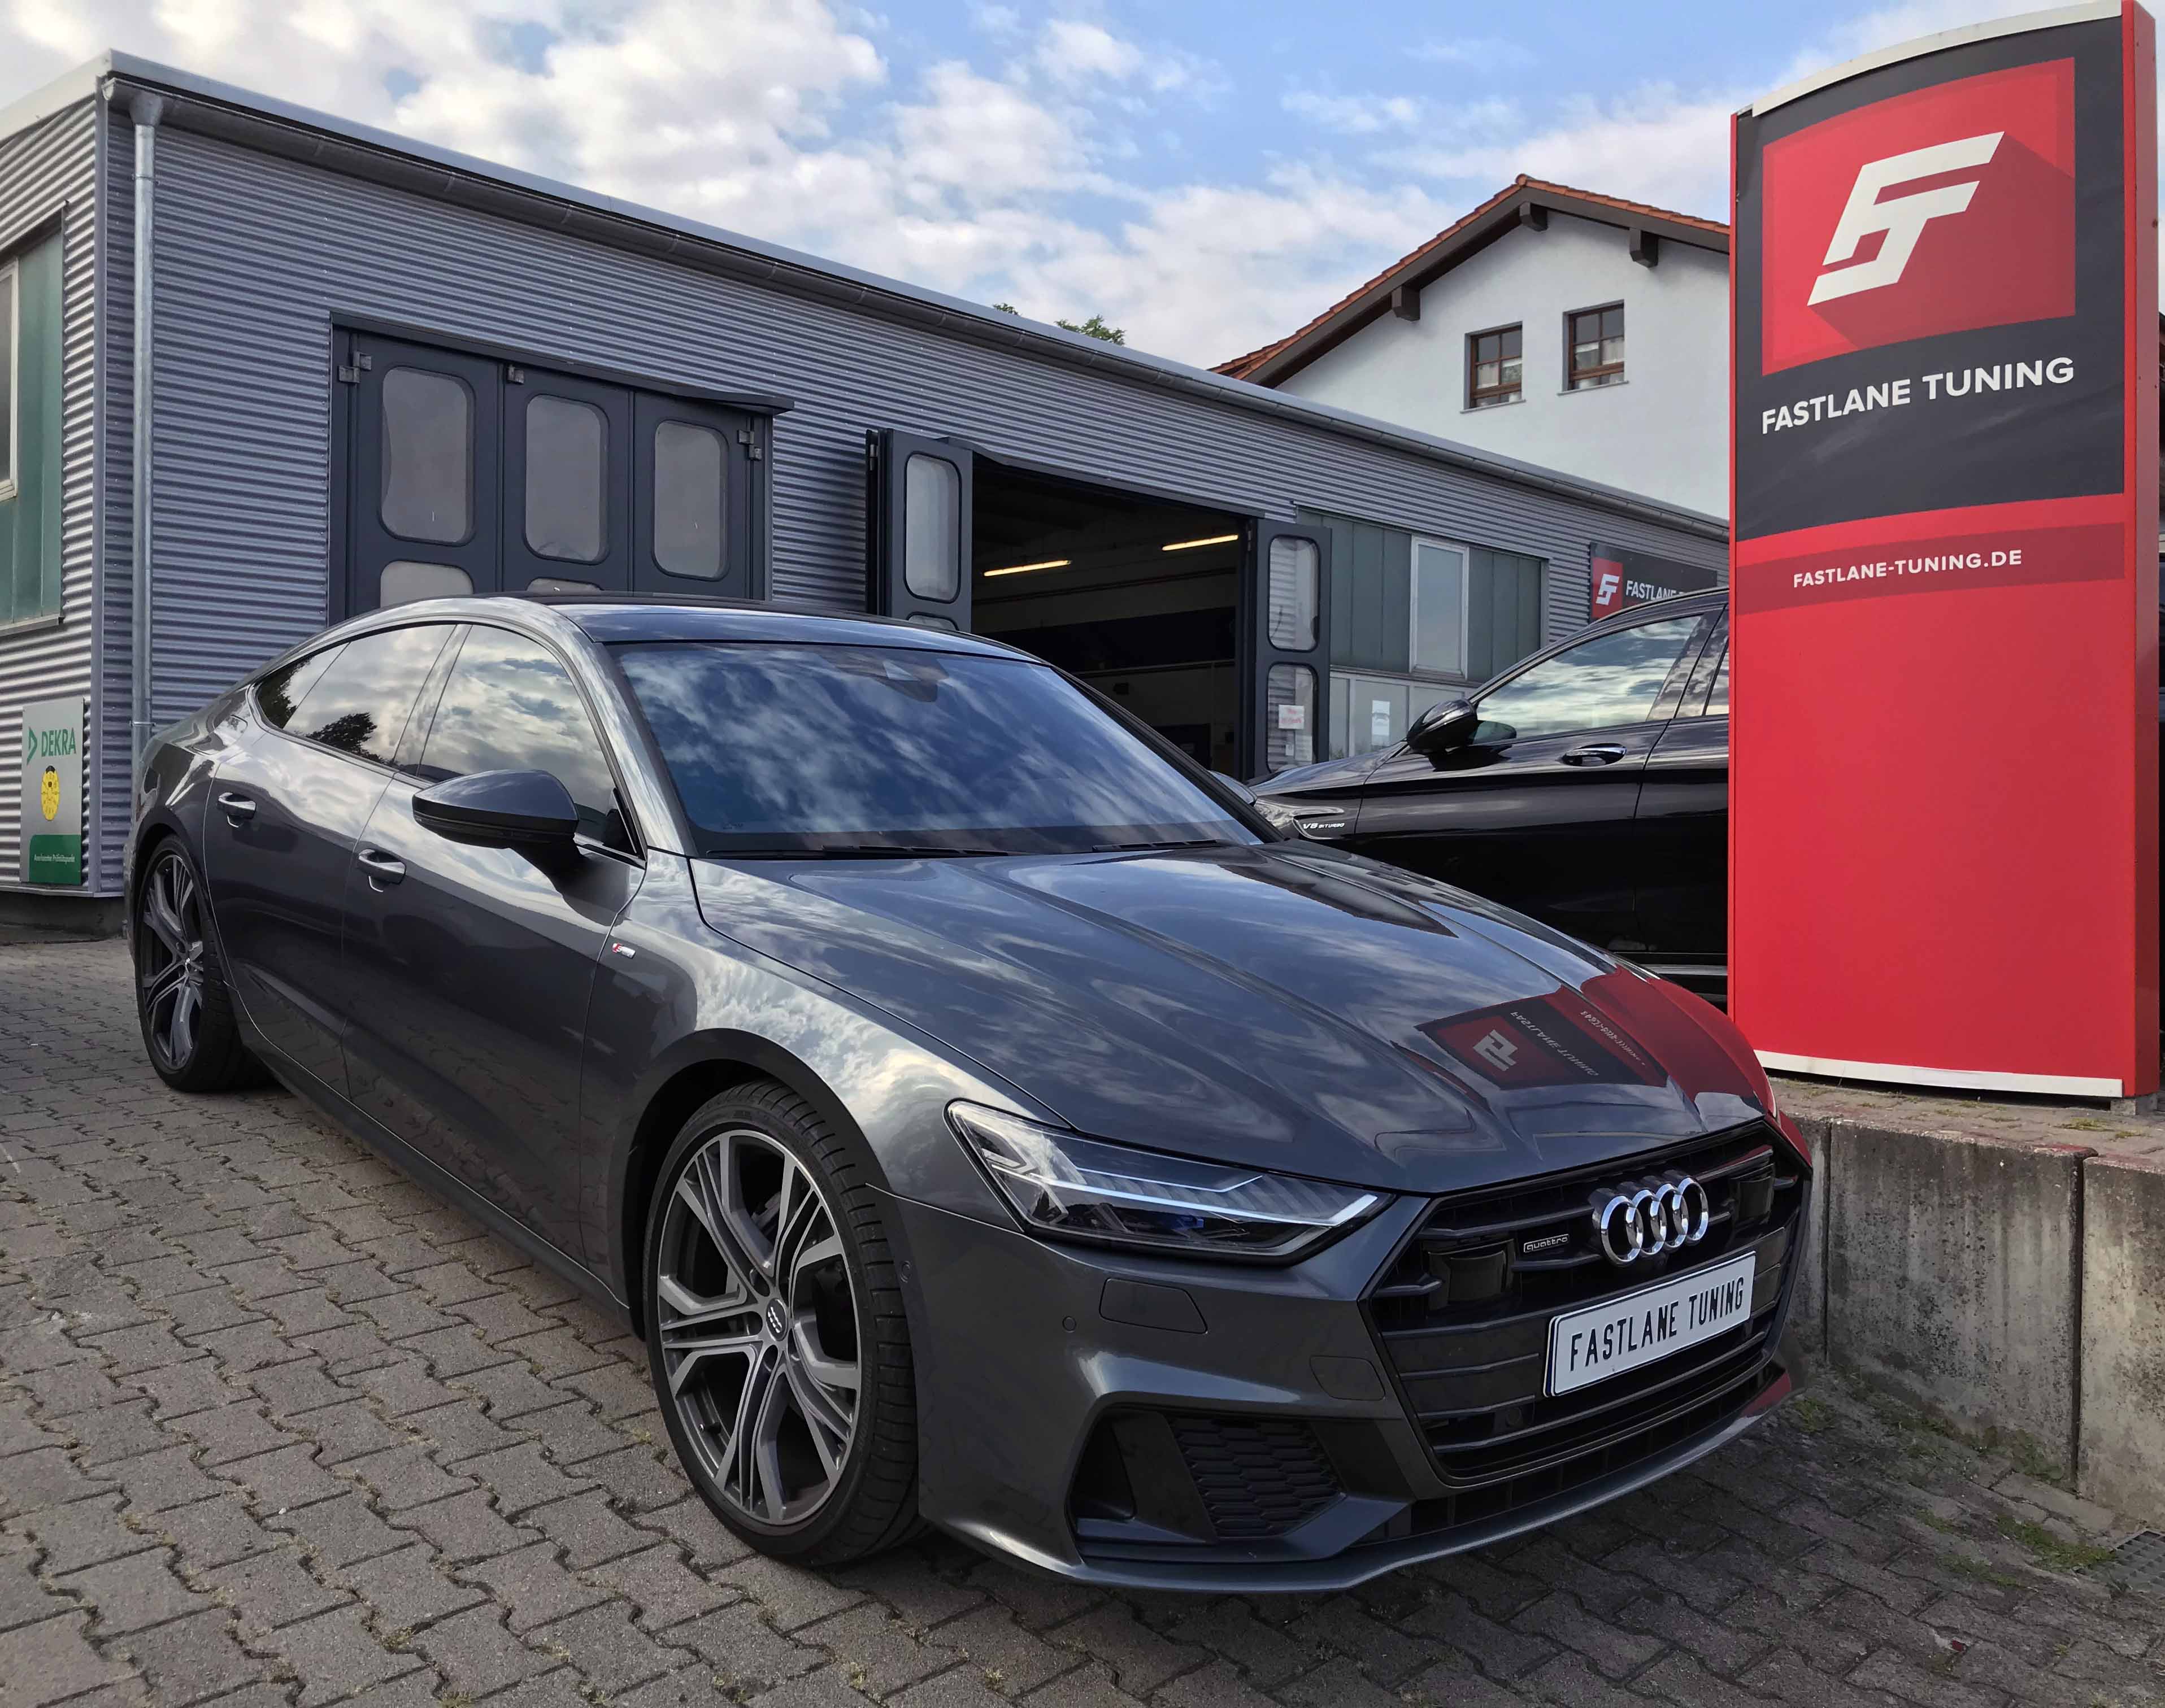 Audi_A7_Fastlane_Tuning